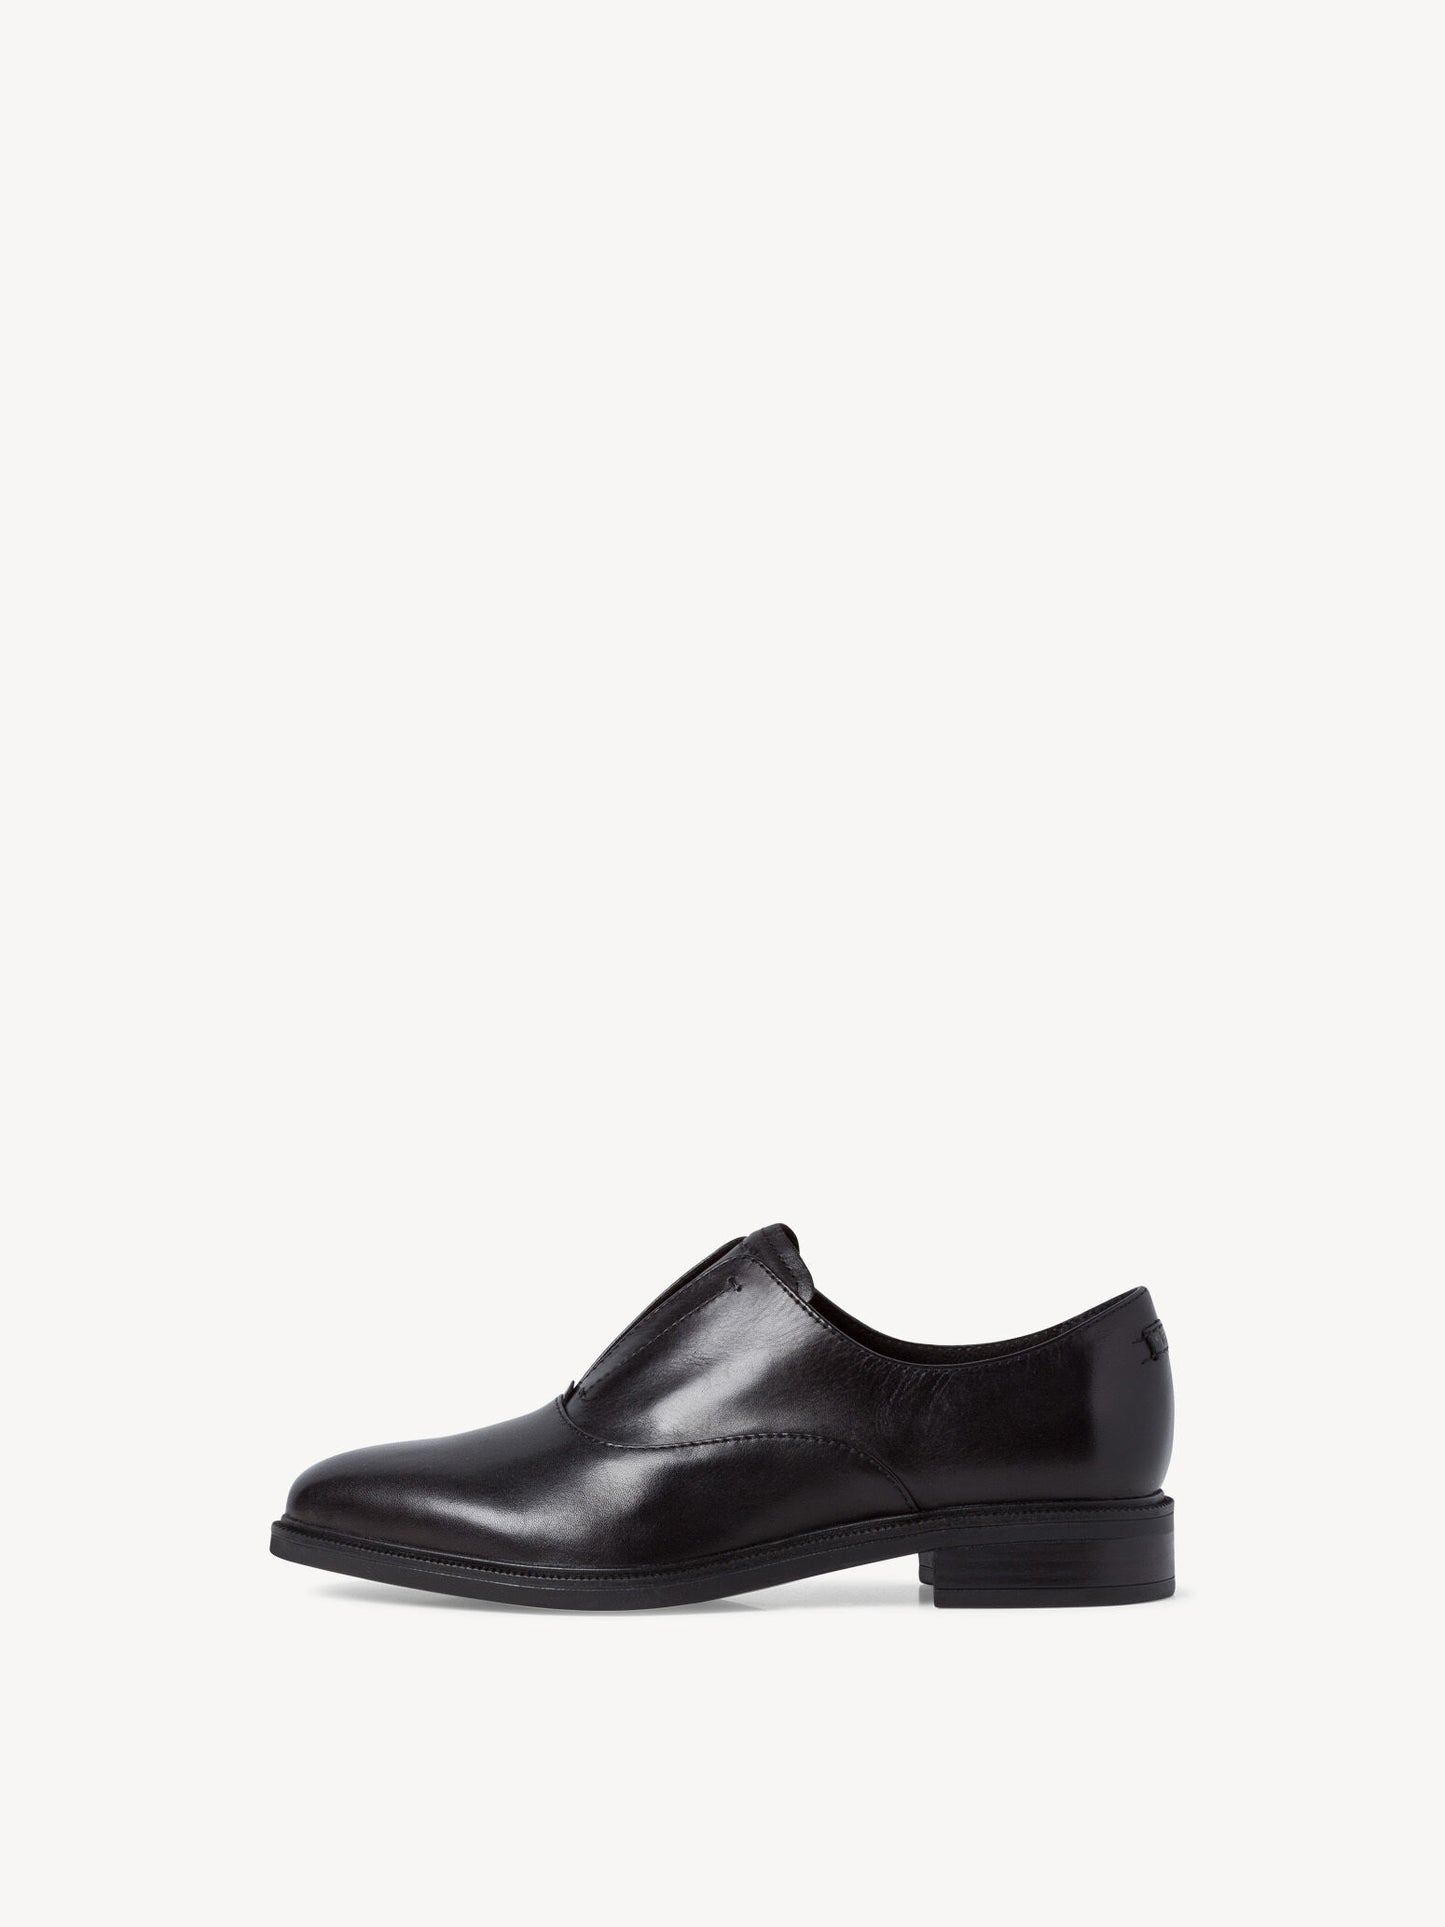 Tamaris Women's 1-24201-27 Leather Slipper Loafer Shoes Black